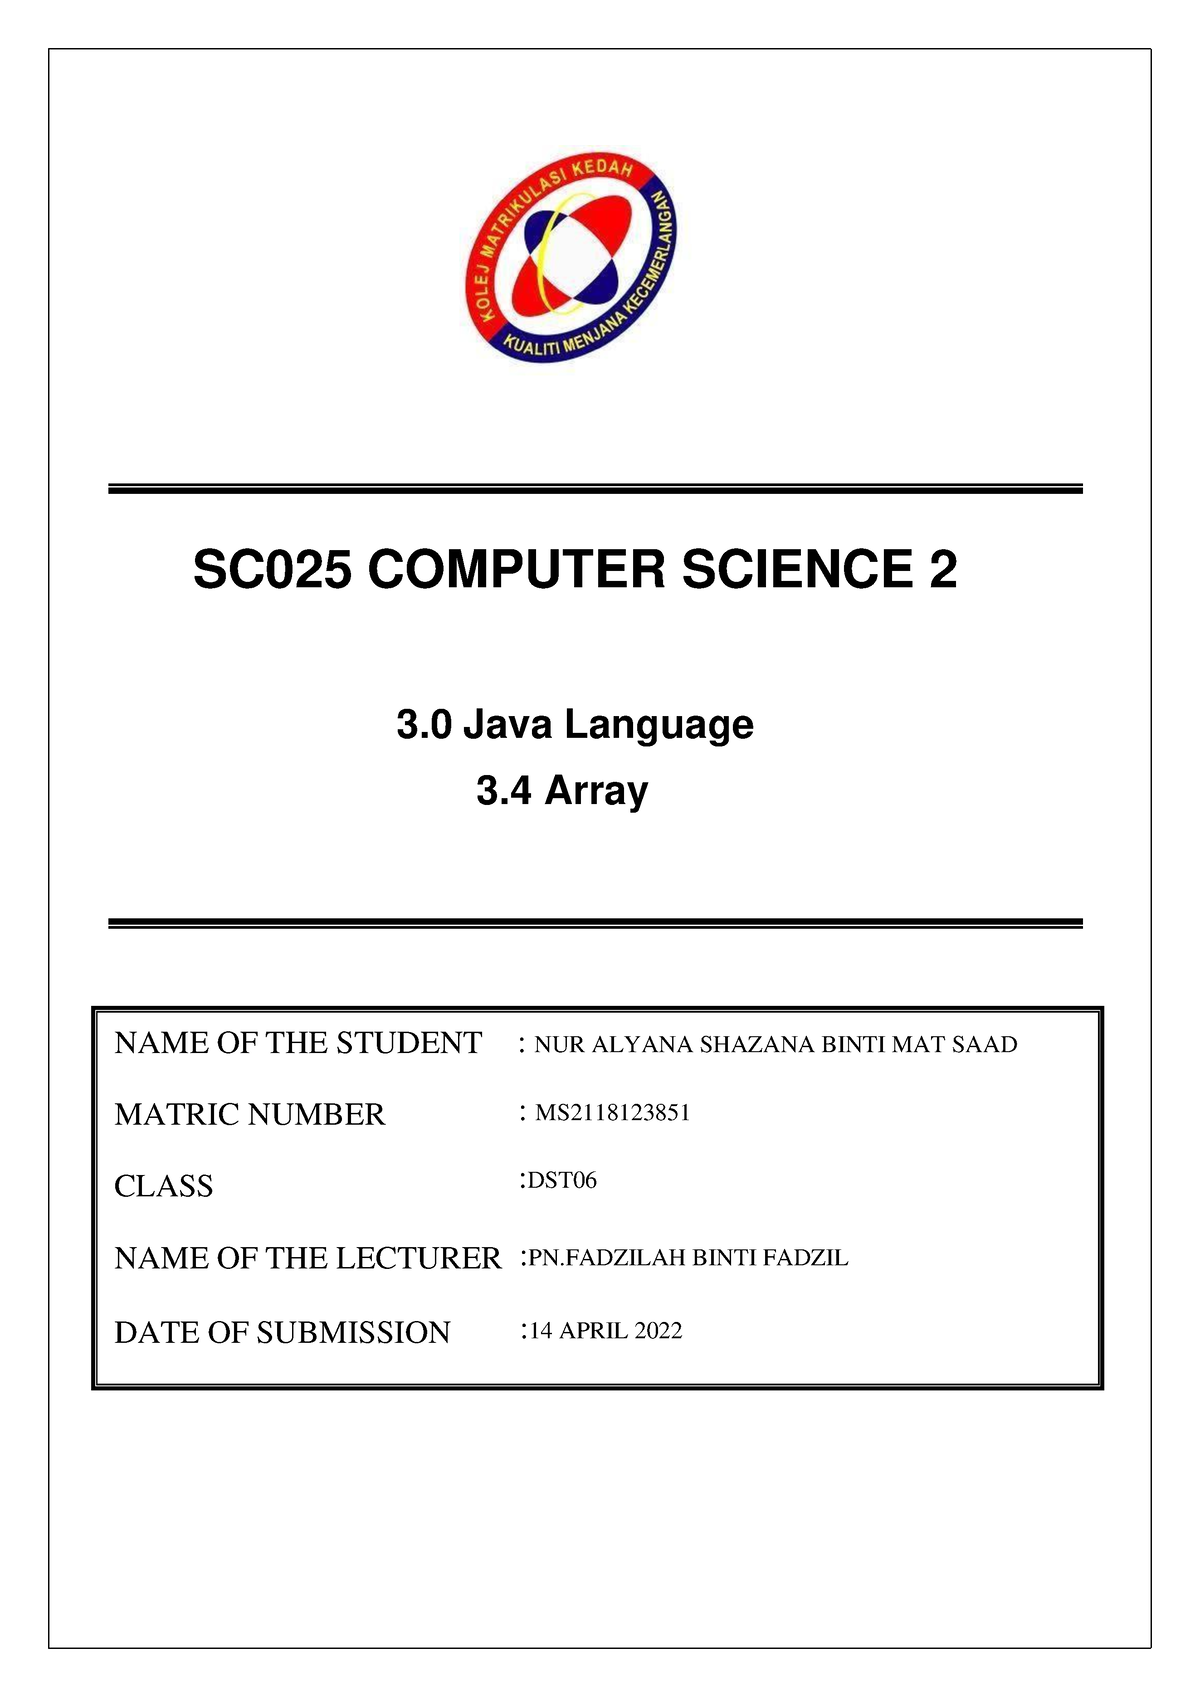 assignment sc025 array